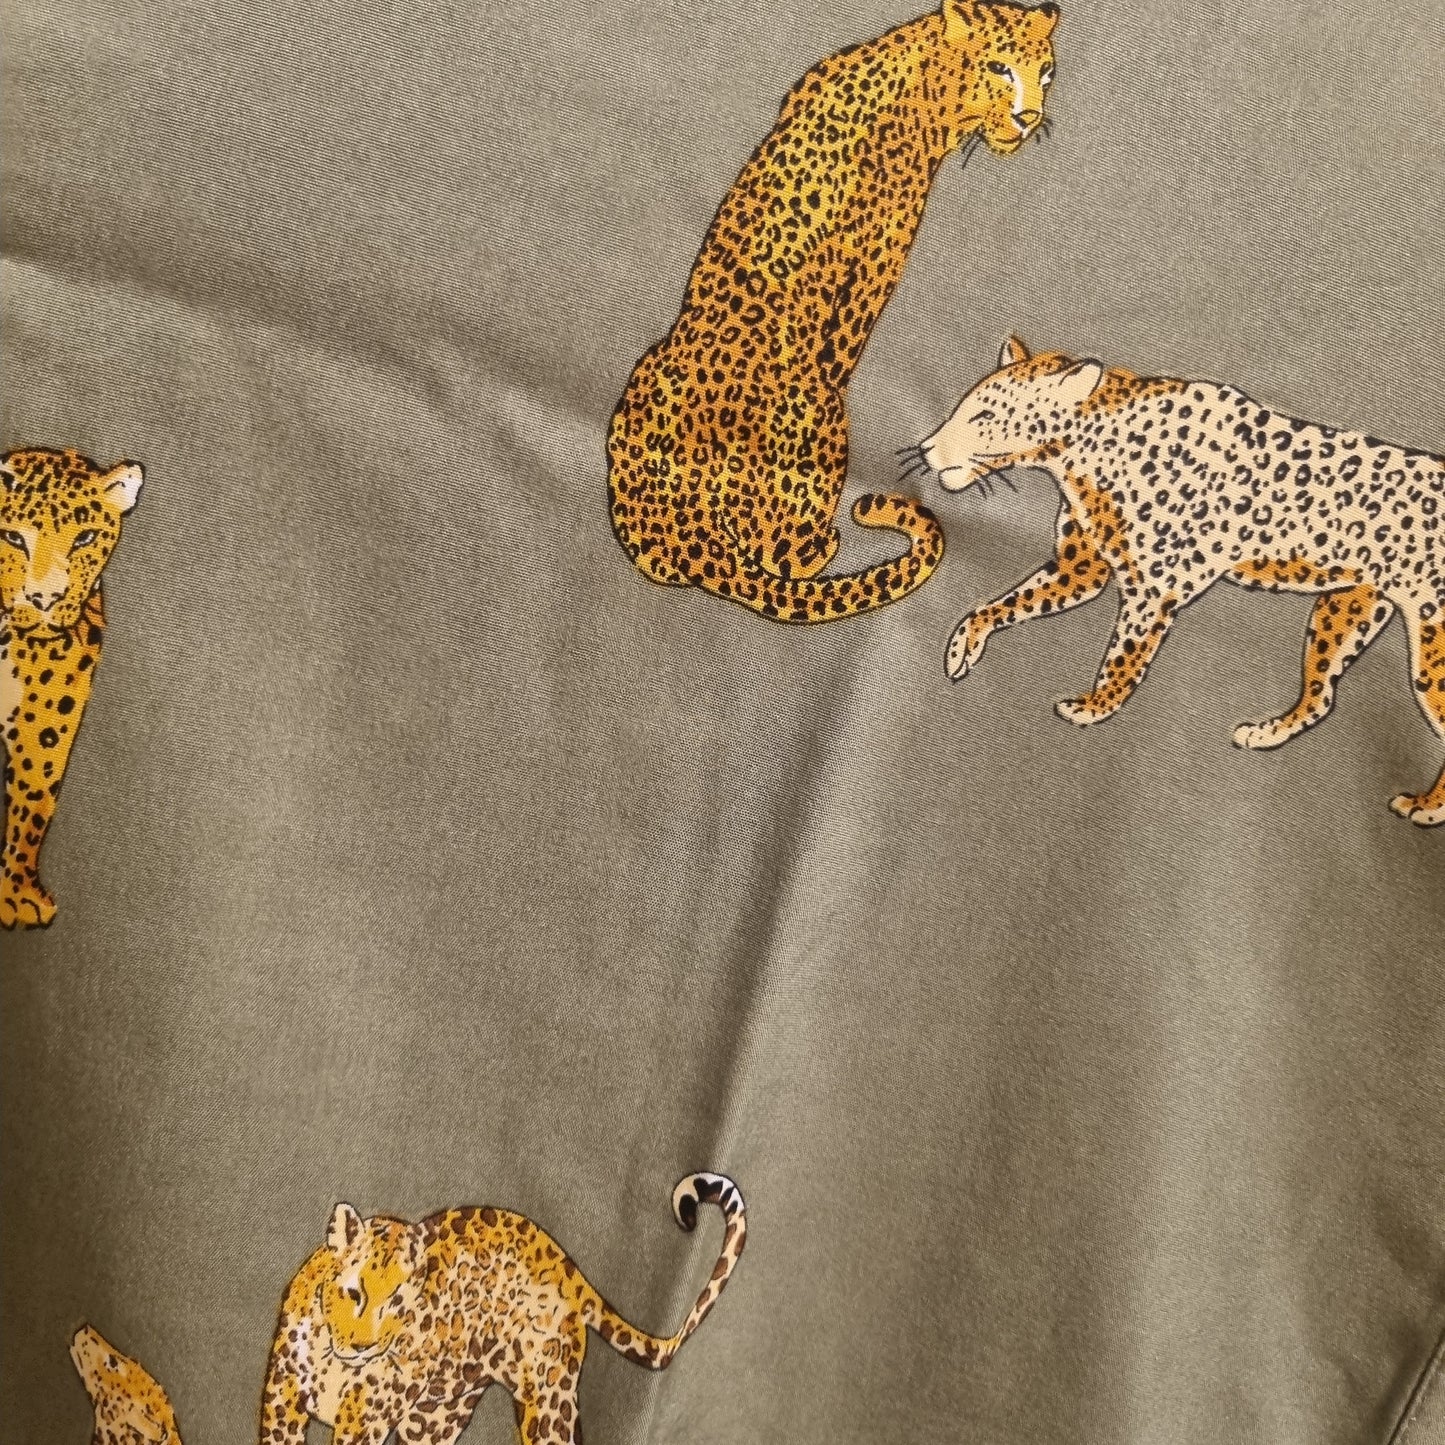 Leopard animal print shirt